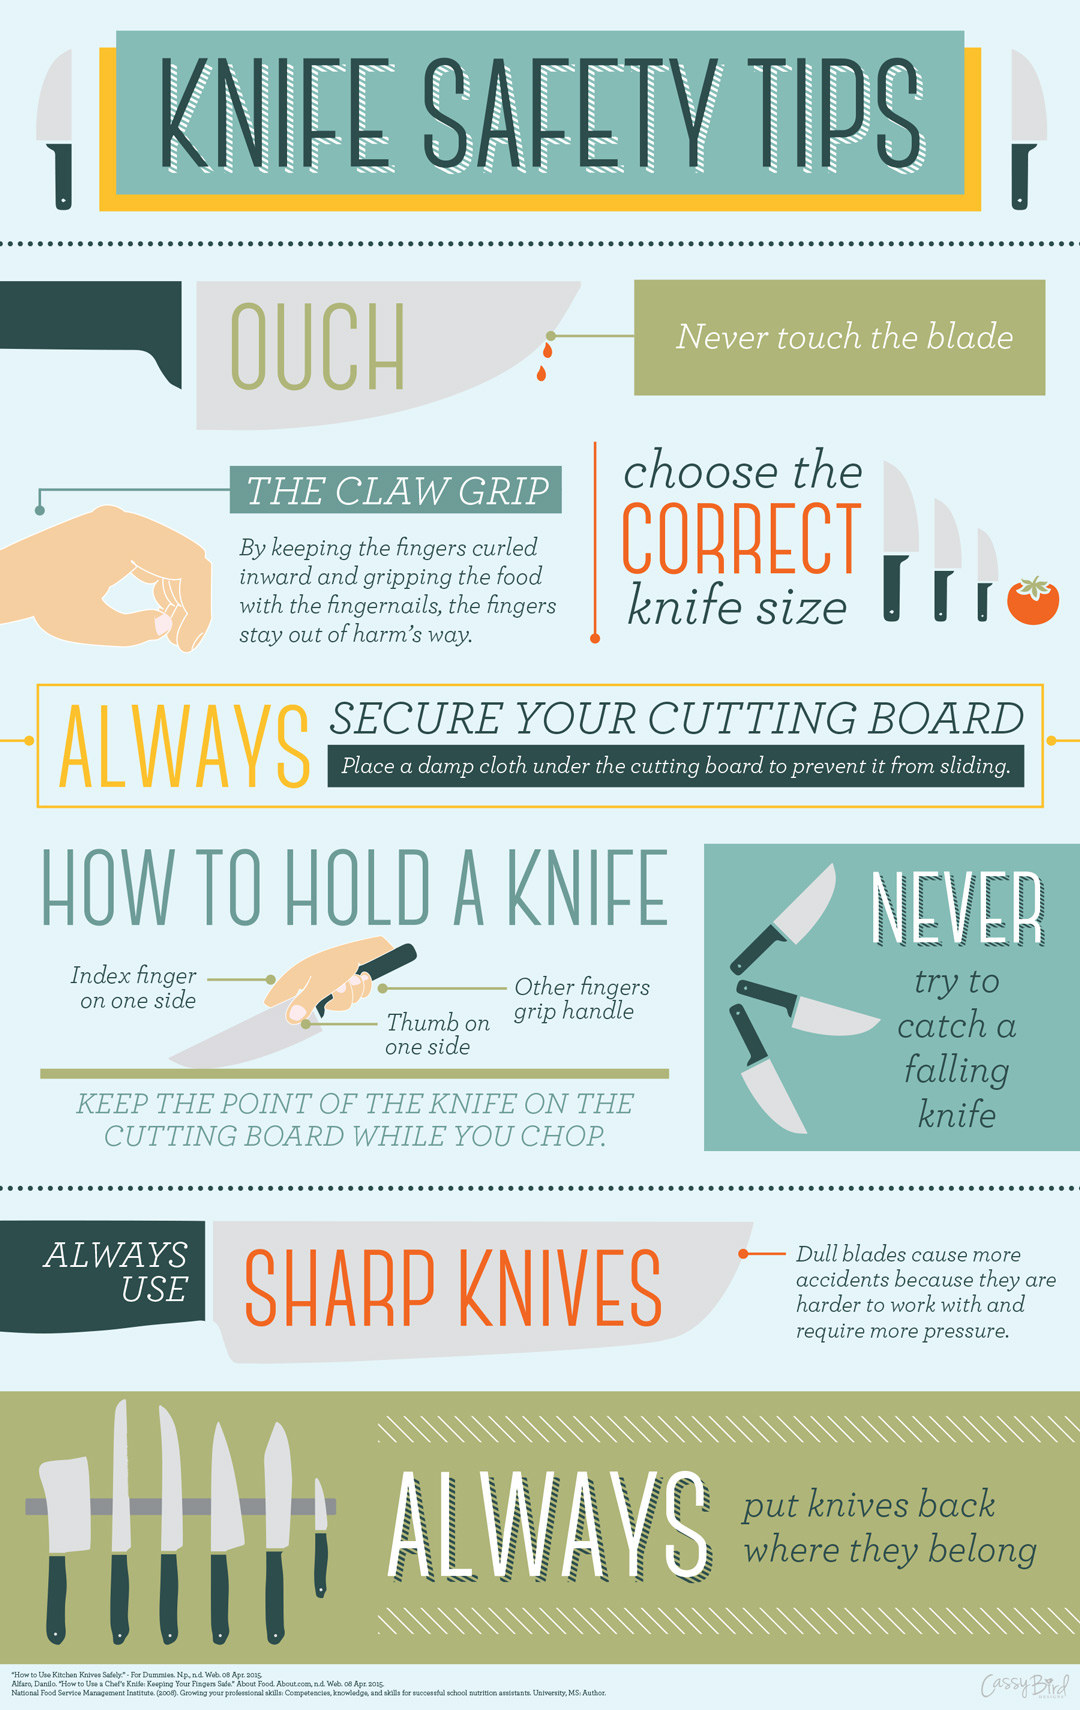 KnifeSafety